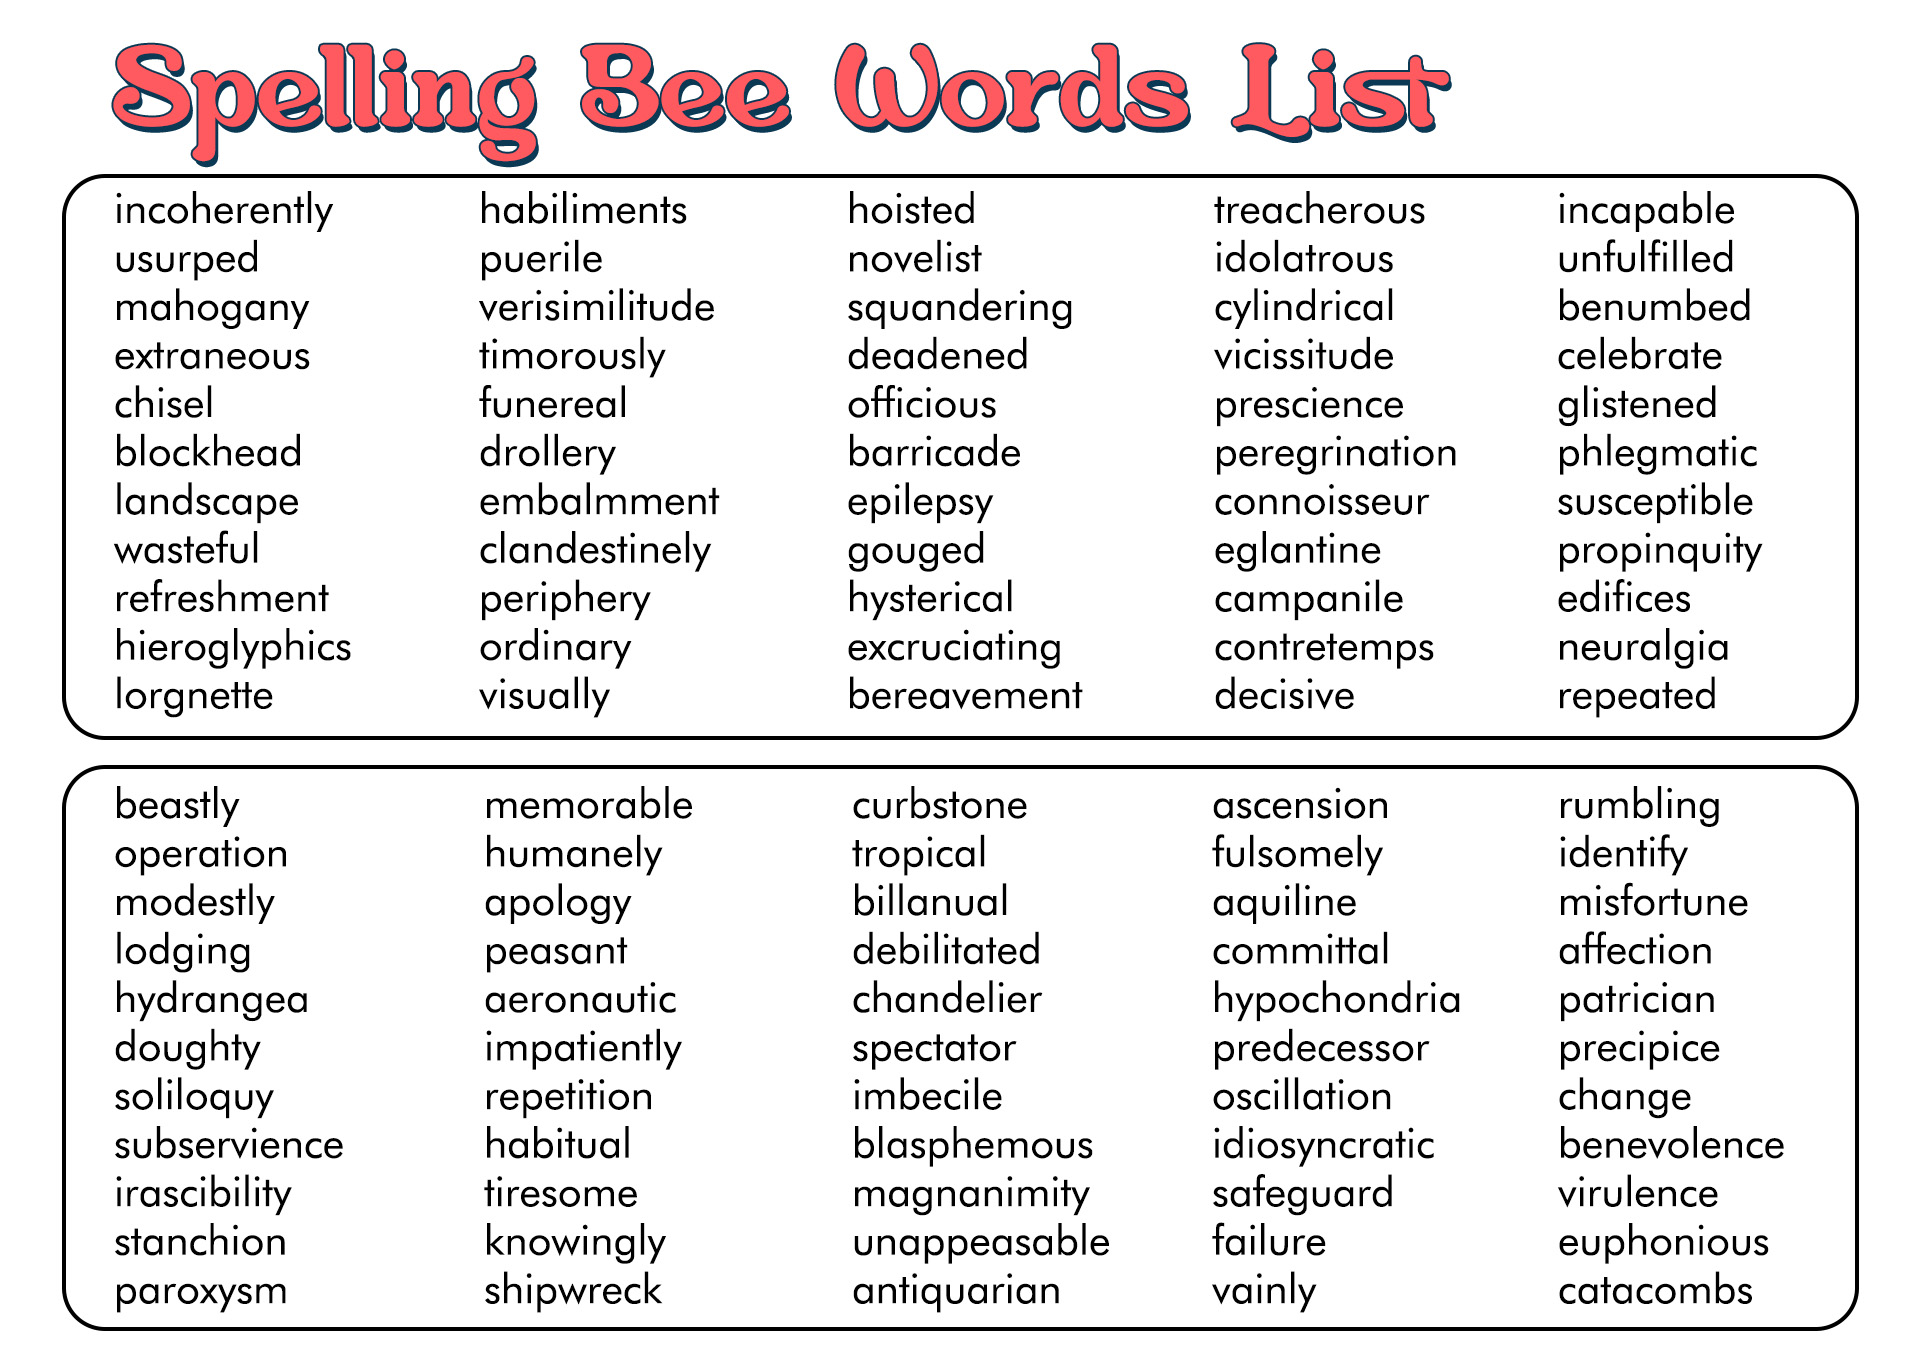 16-6th-grade-spelling-words-worksheets-free-pdf-at-worksheeto